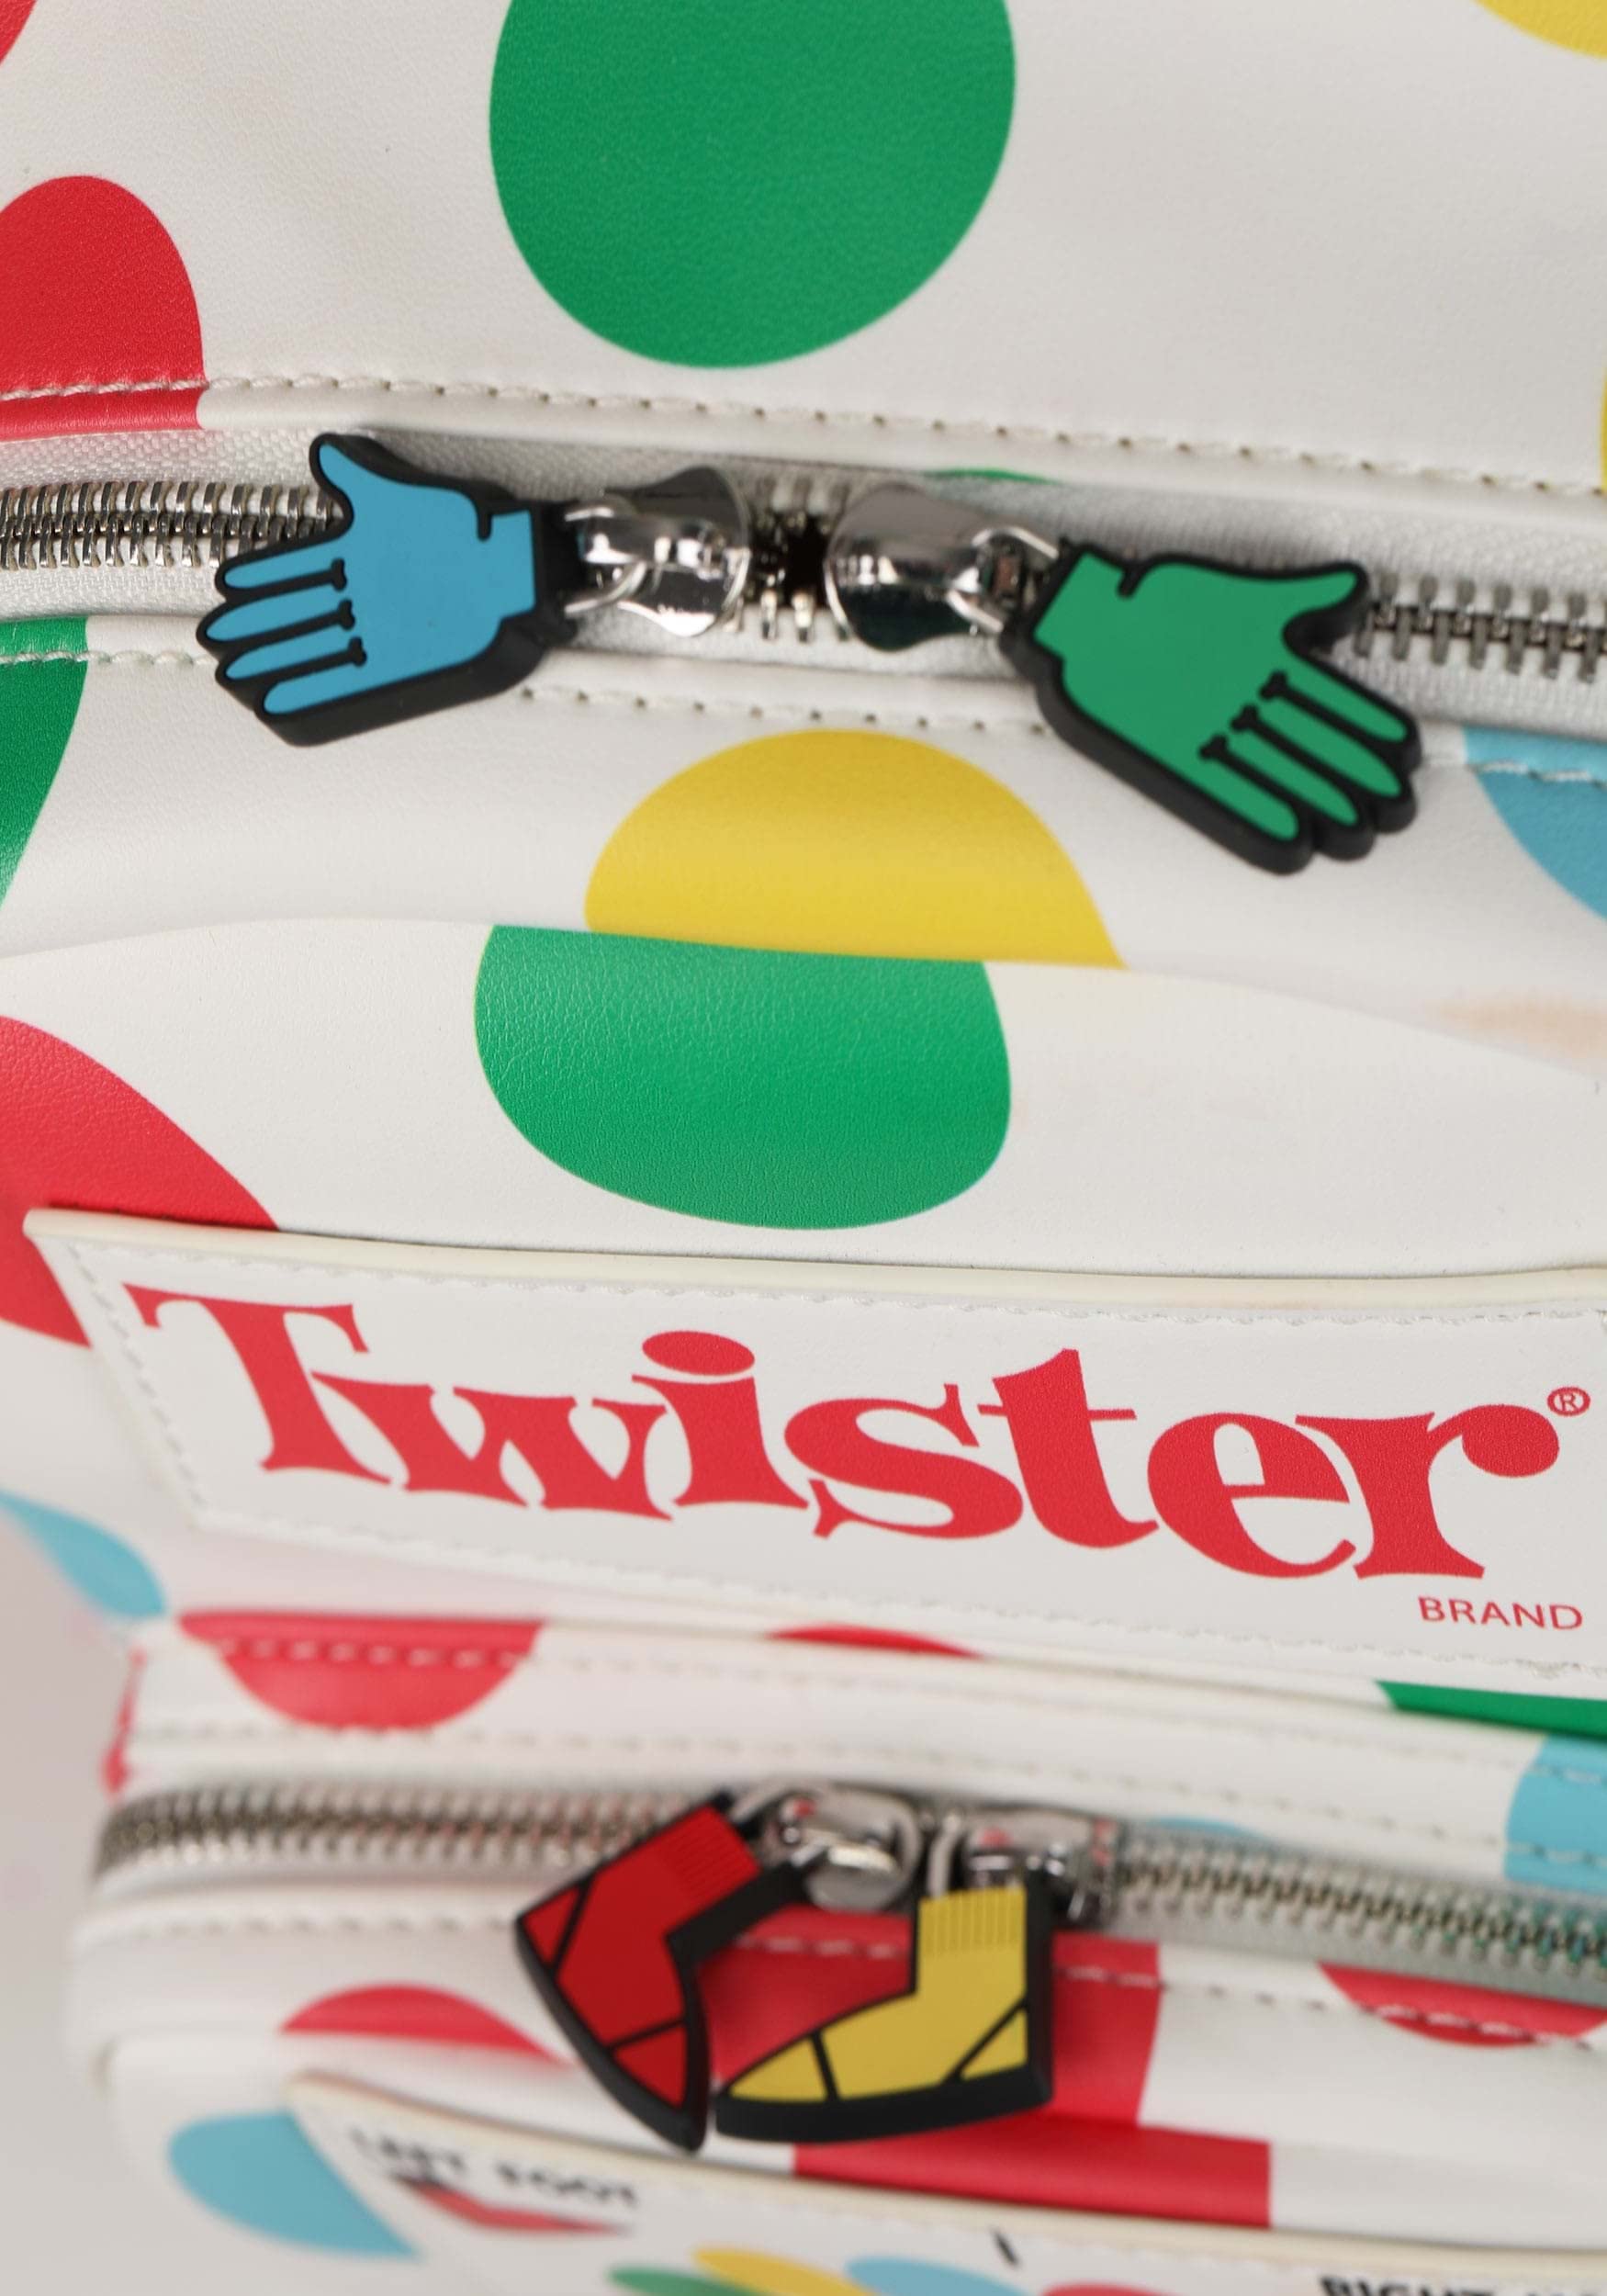 FUN.COM Hasbro Twister Mini Backpack - ST